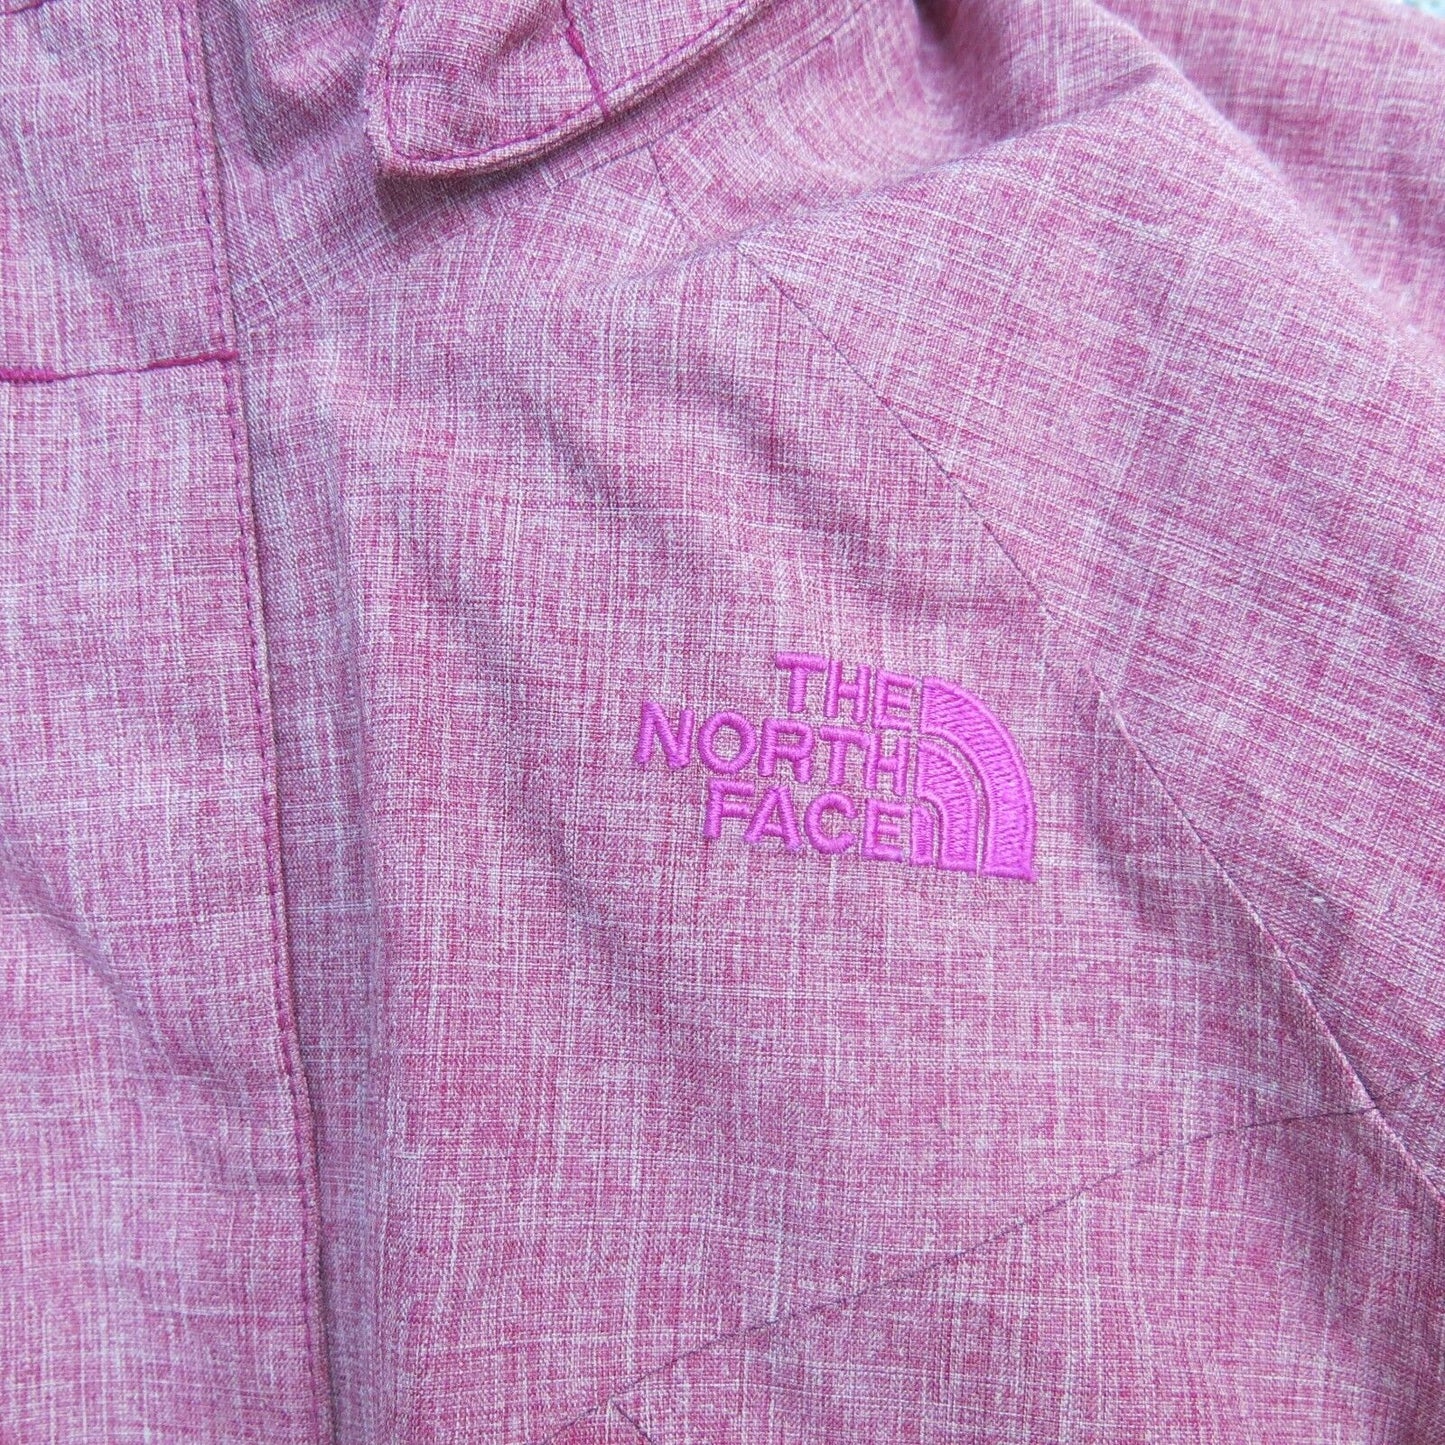 North Face Jacket Women M Pink Long Sleeve Lightweight Outdoors Hooded Coat Logo